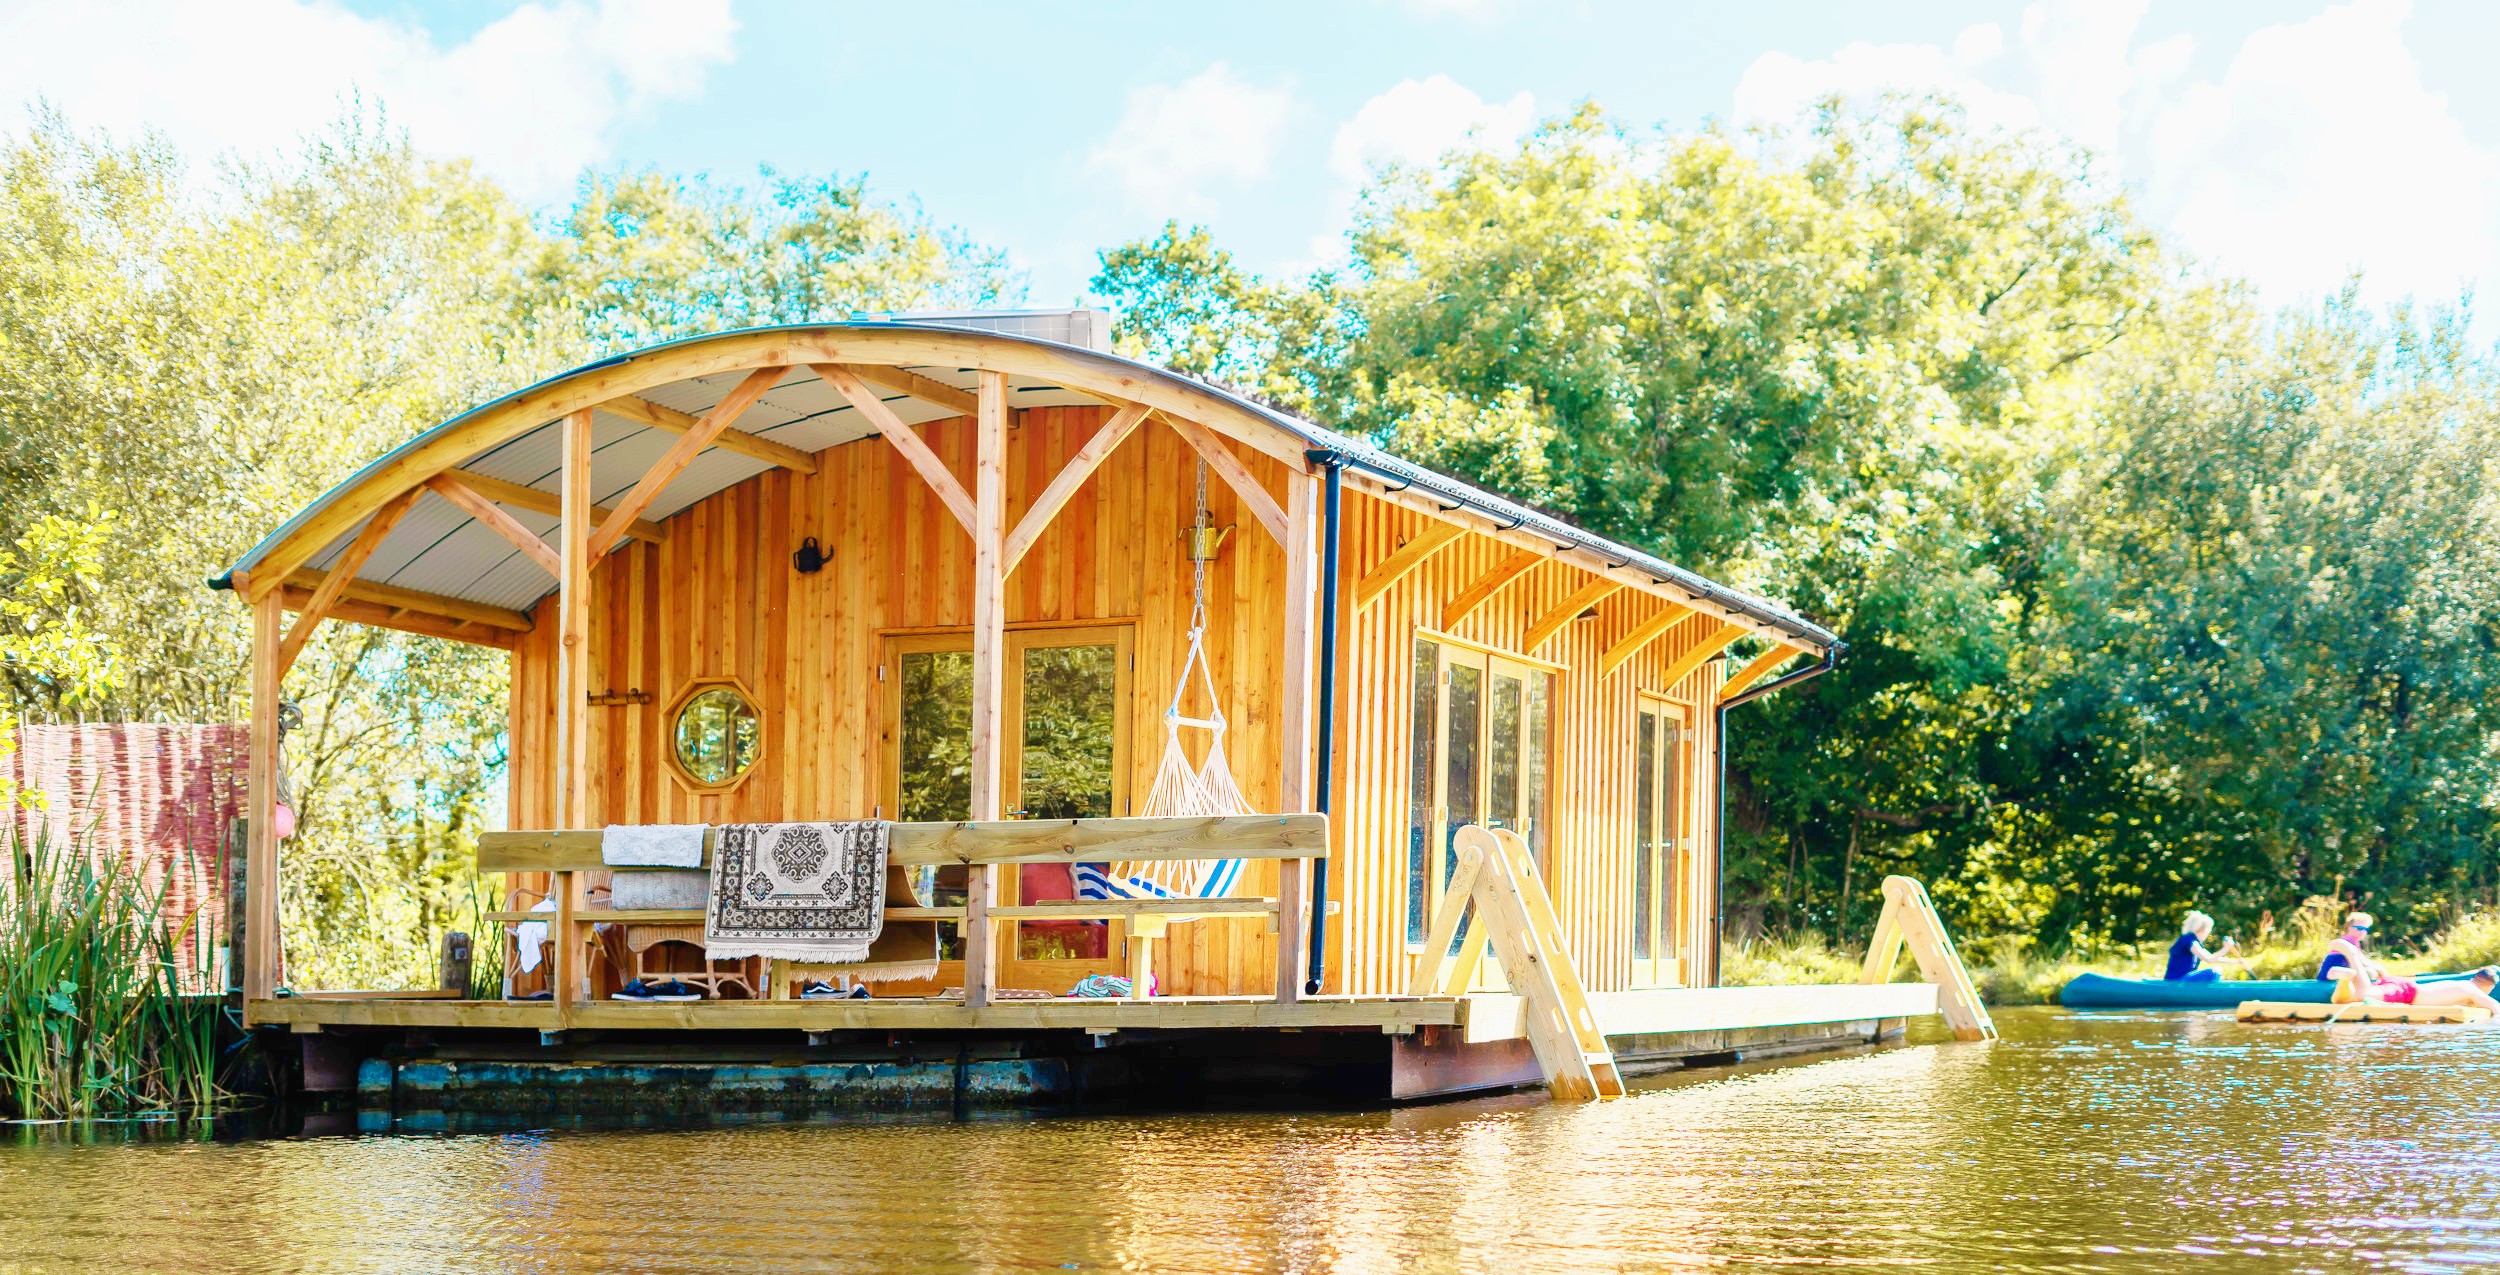 <img src="kingfisher.jpg" alt="kingfisher house boat on lake"/>